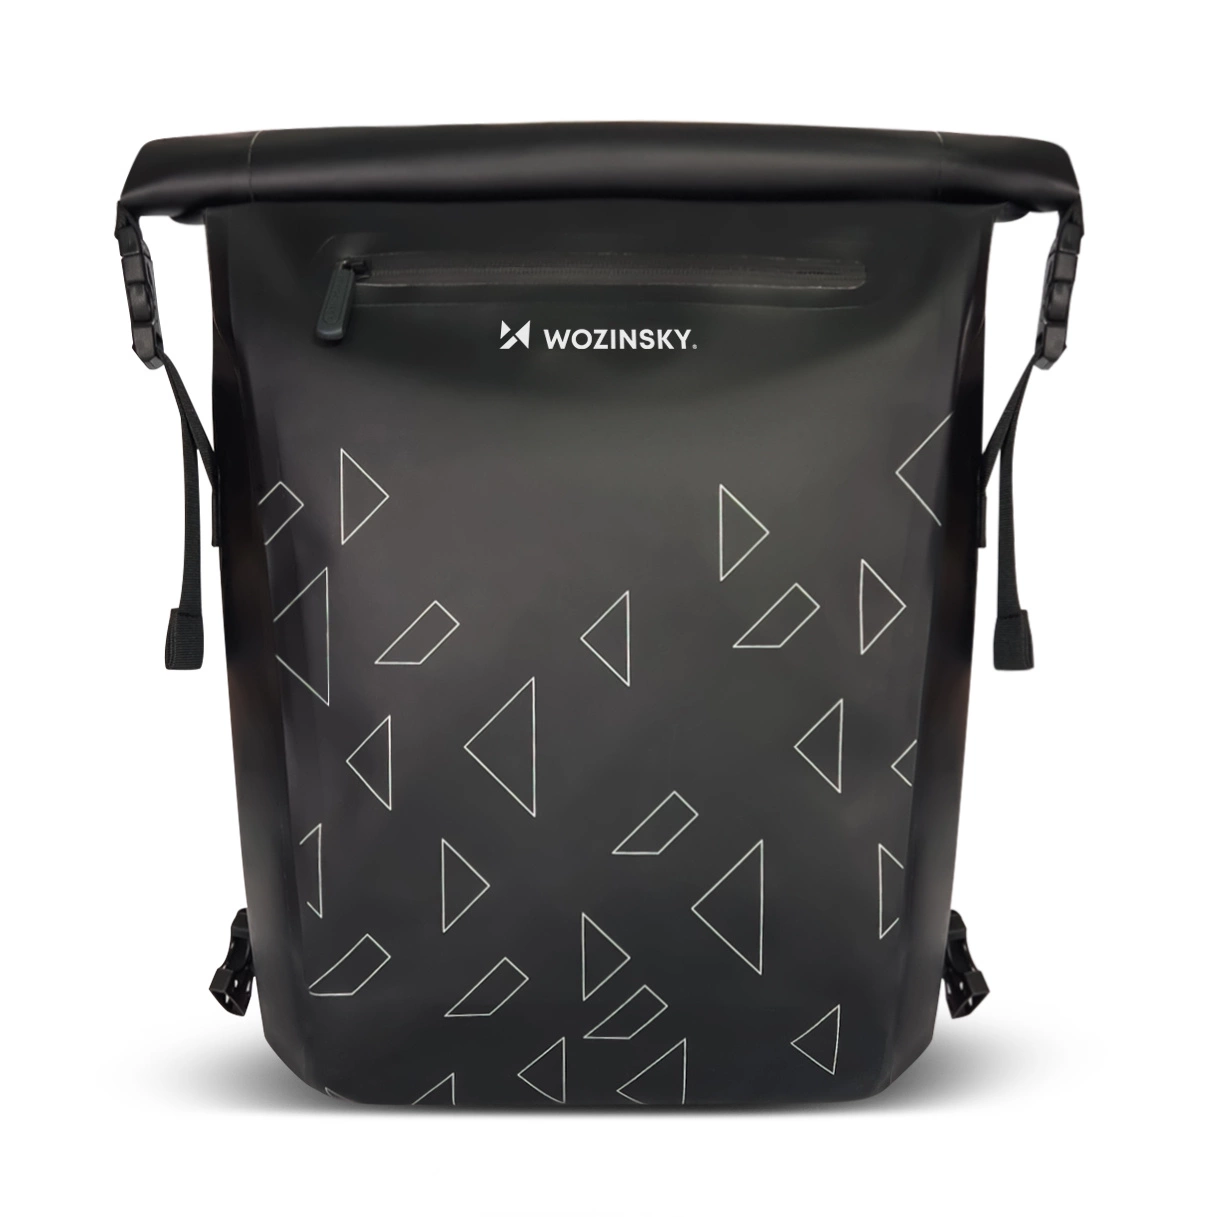 Wozinsky vodotěsný batoh na kolo 2v1 23l černý (WBB31BK)